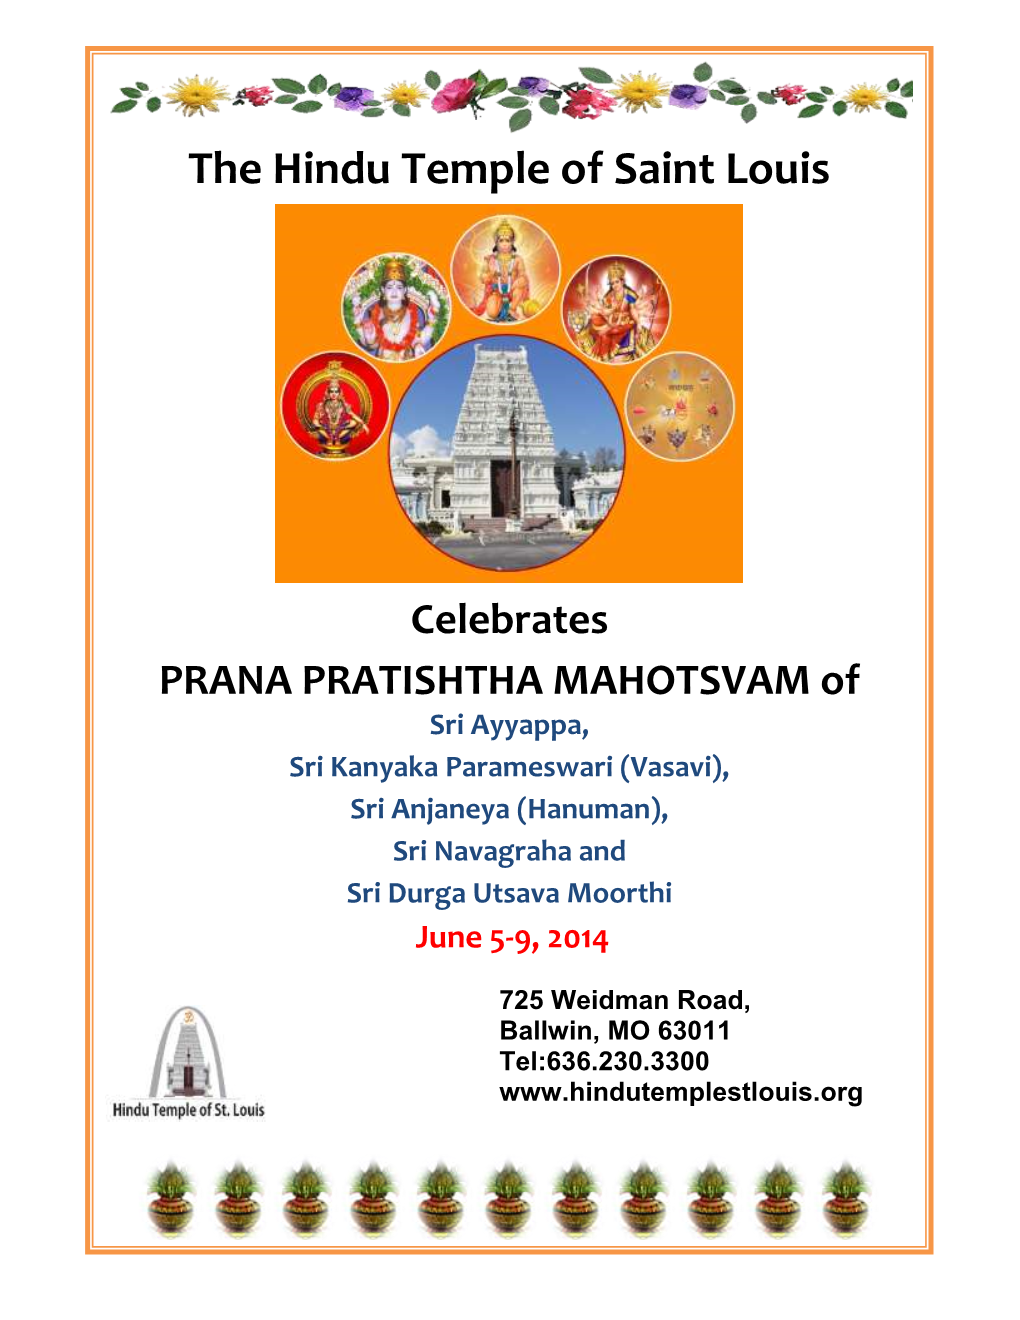 The Hindu Temple of Saint Louis